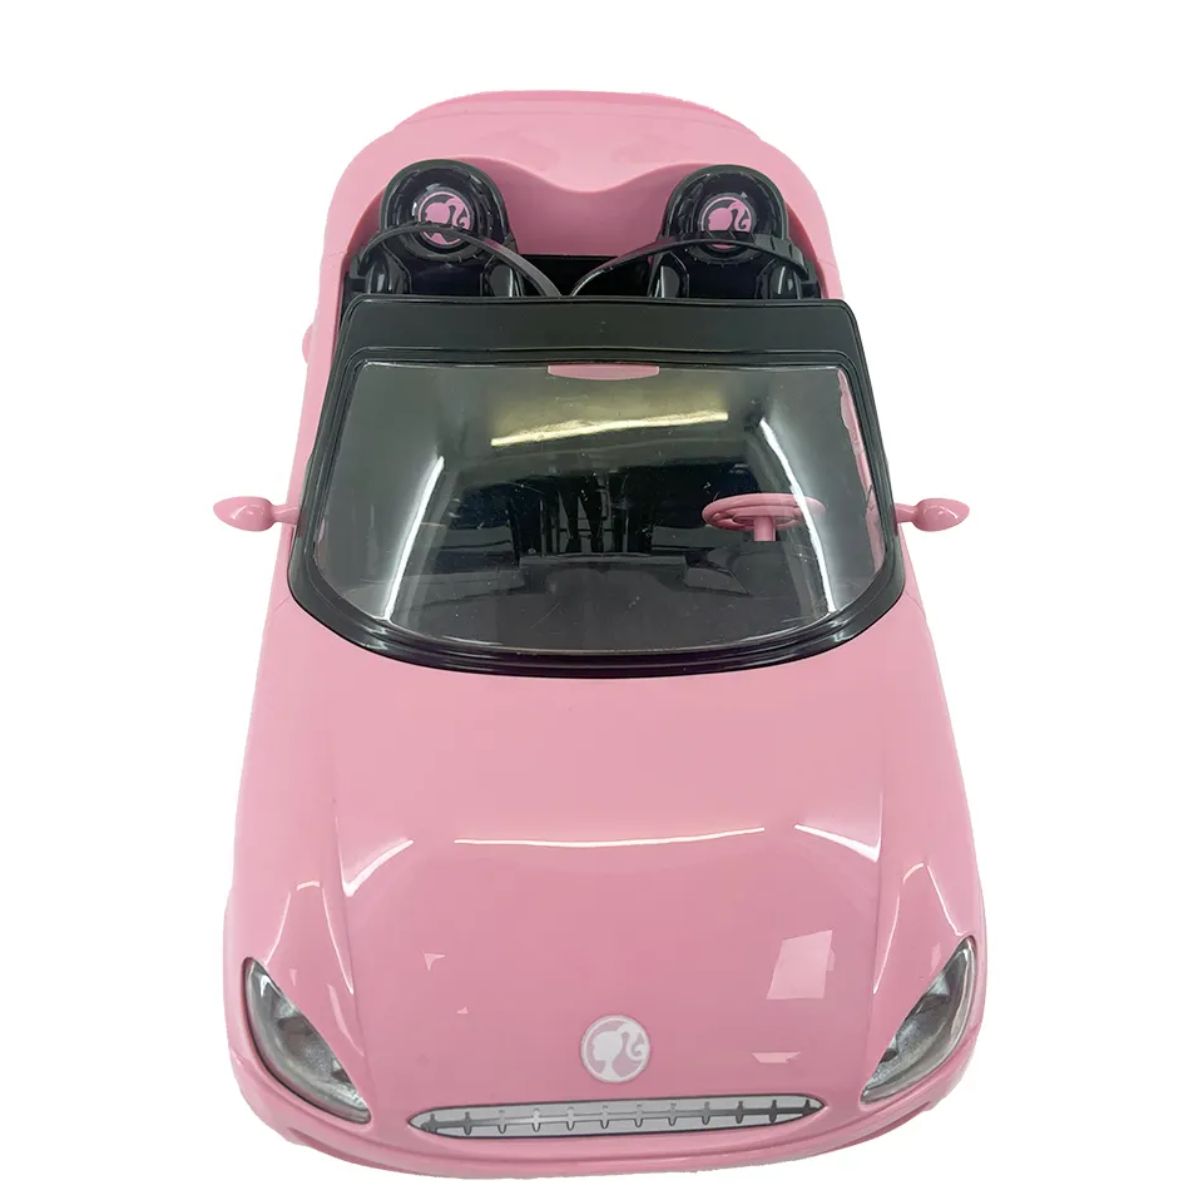 Carro Controle Remoto 7 Funções Barbie Style Car - Candide